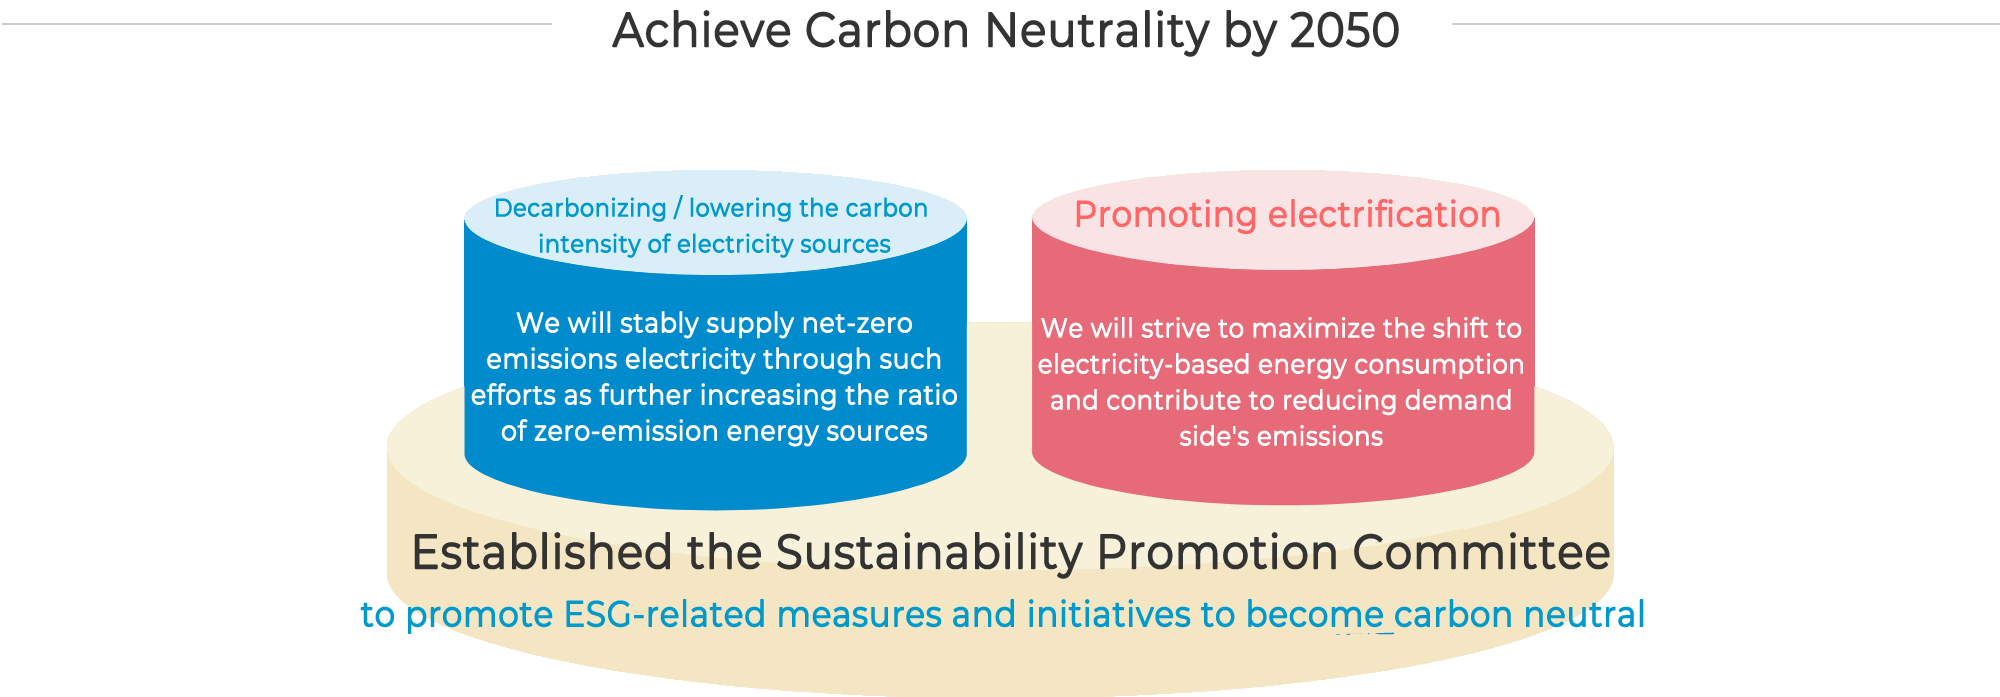 Achieve Carbon Neutrality by 2050